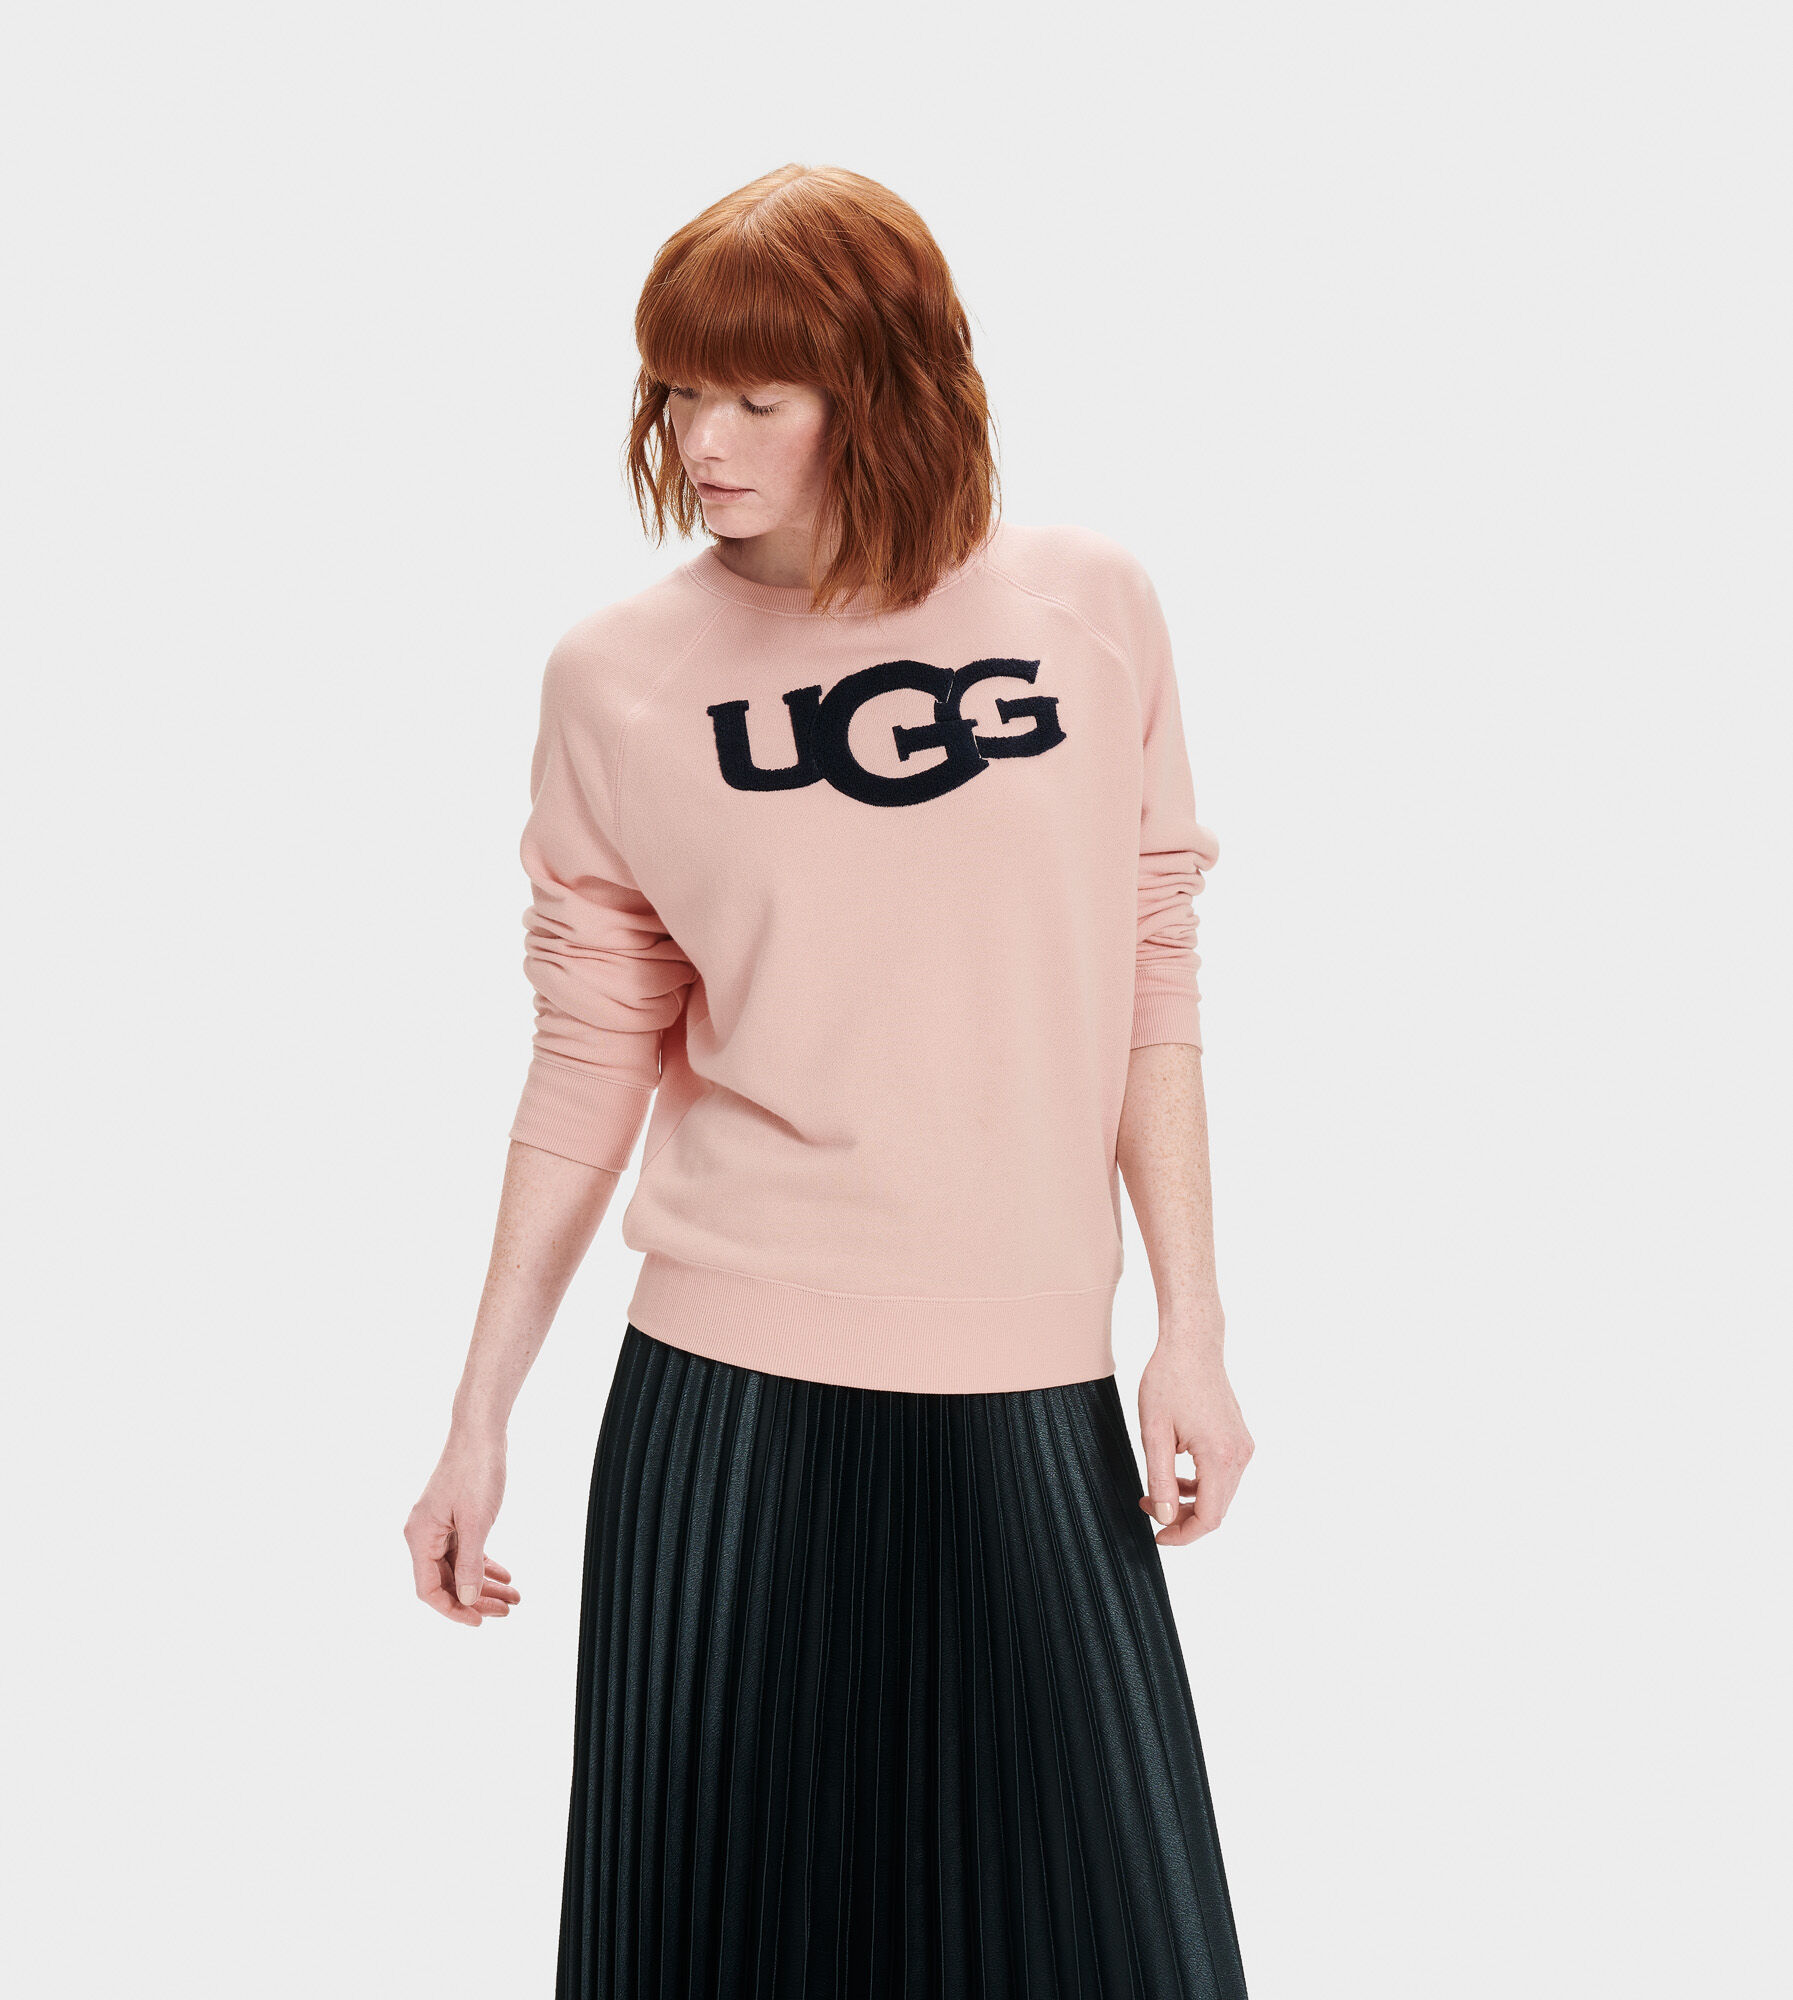 Ugg Fuzzy Logo Sweatshirt Online, 57% OFF | www.pegasusaerogroup.com